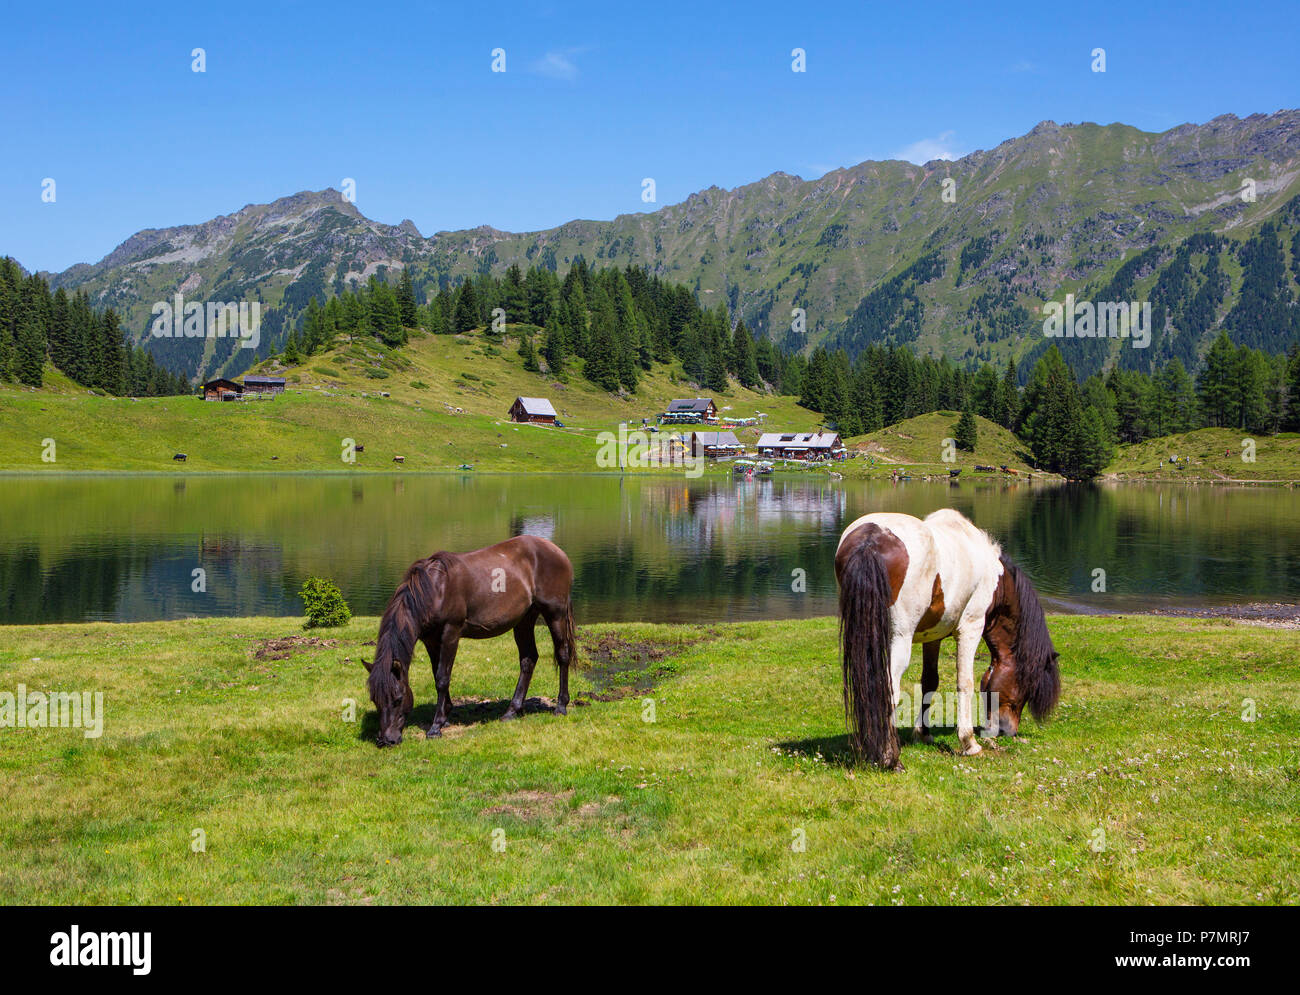 Austria, Styria, Schladming, Obertal, Duisitzkarsee, mountain lake, Duisitzkar hut, Fahrlechner hut, Schladminger Tauern, Horses Stock Photo